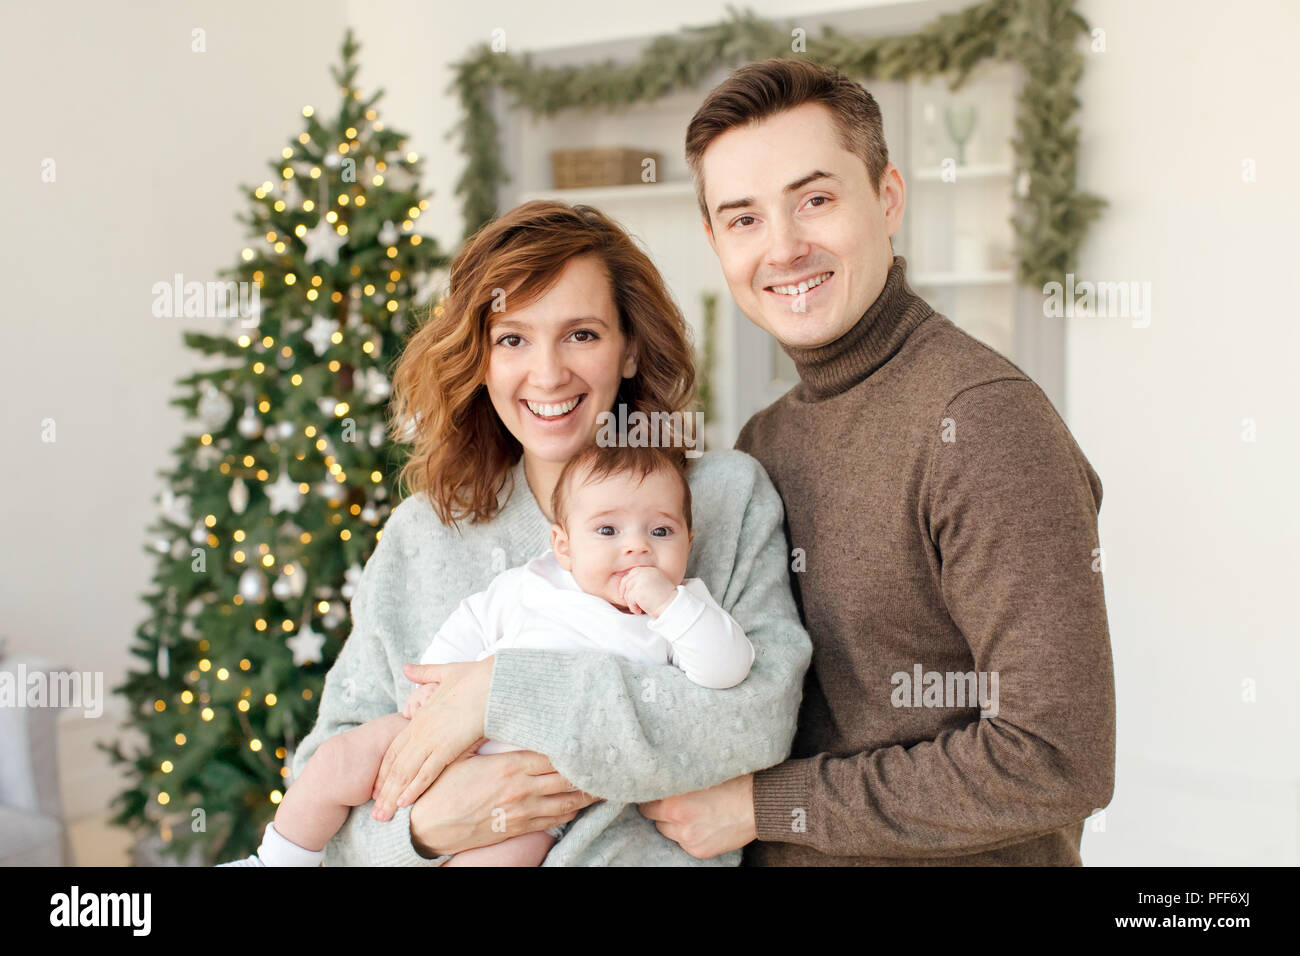 Parents and baby near Christmas tree Stock Photo